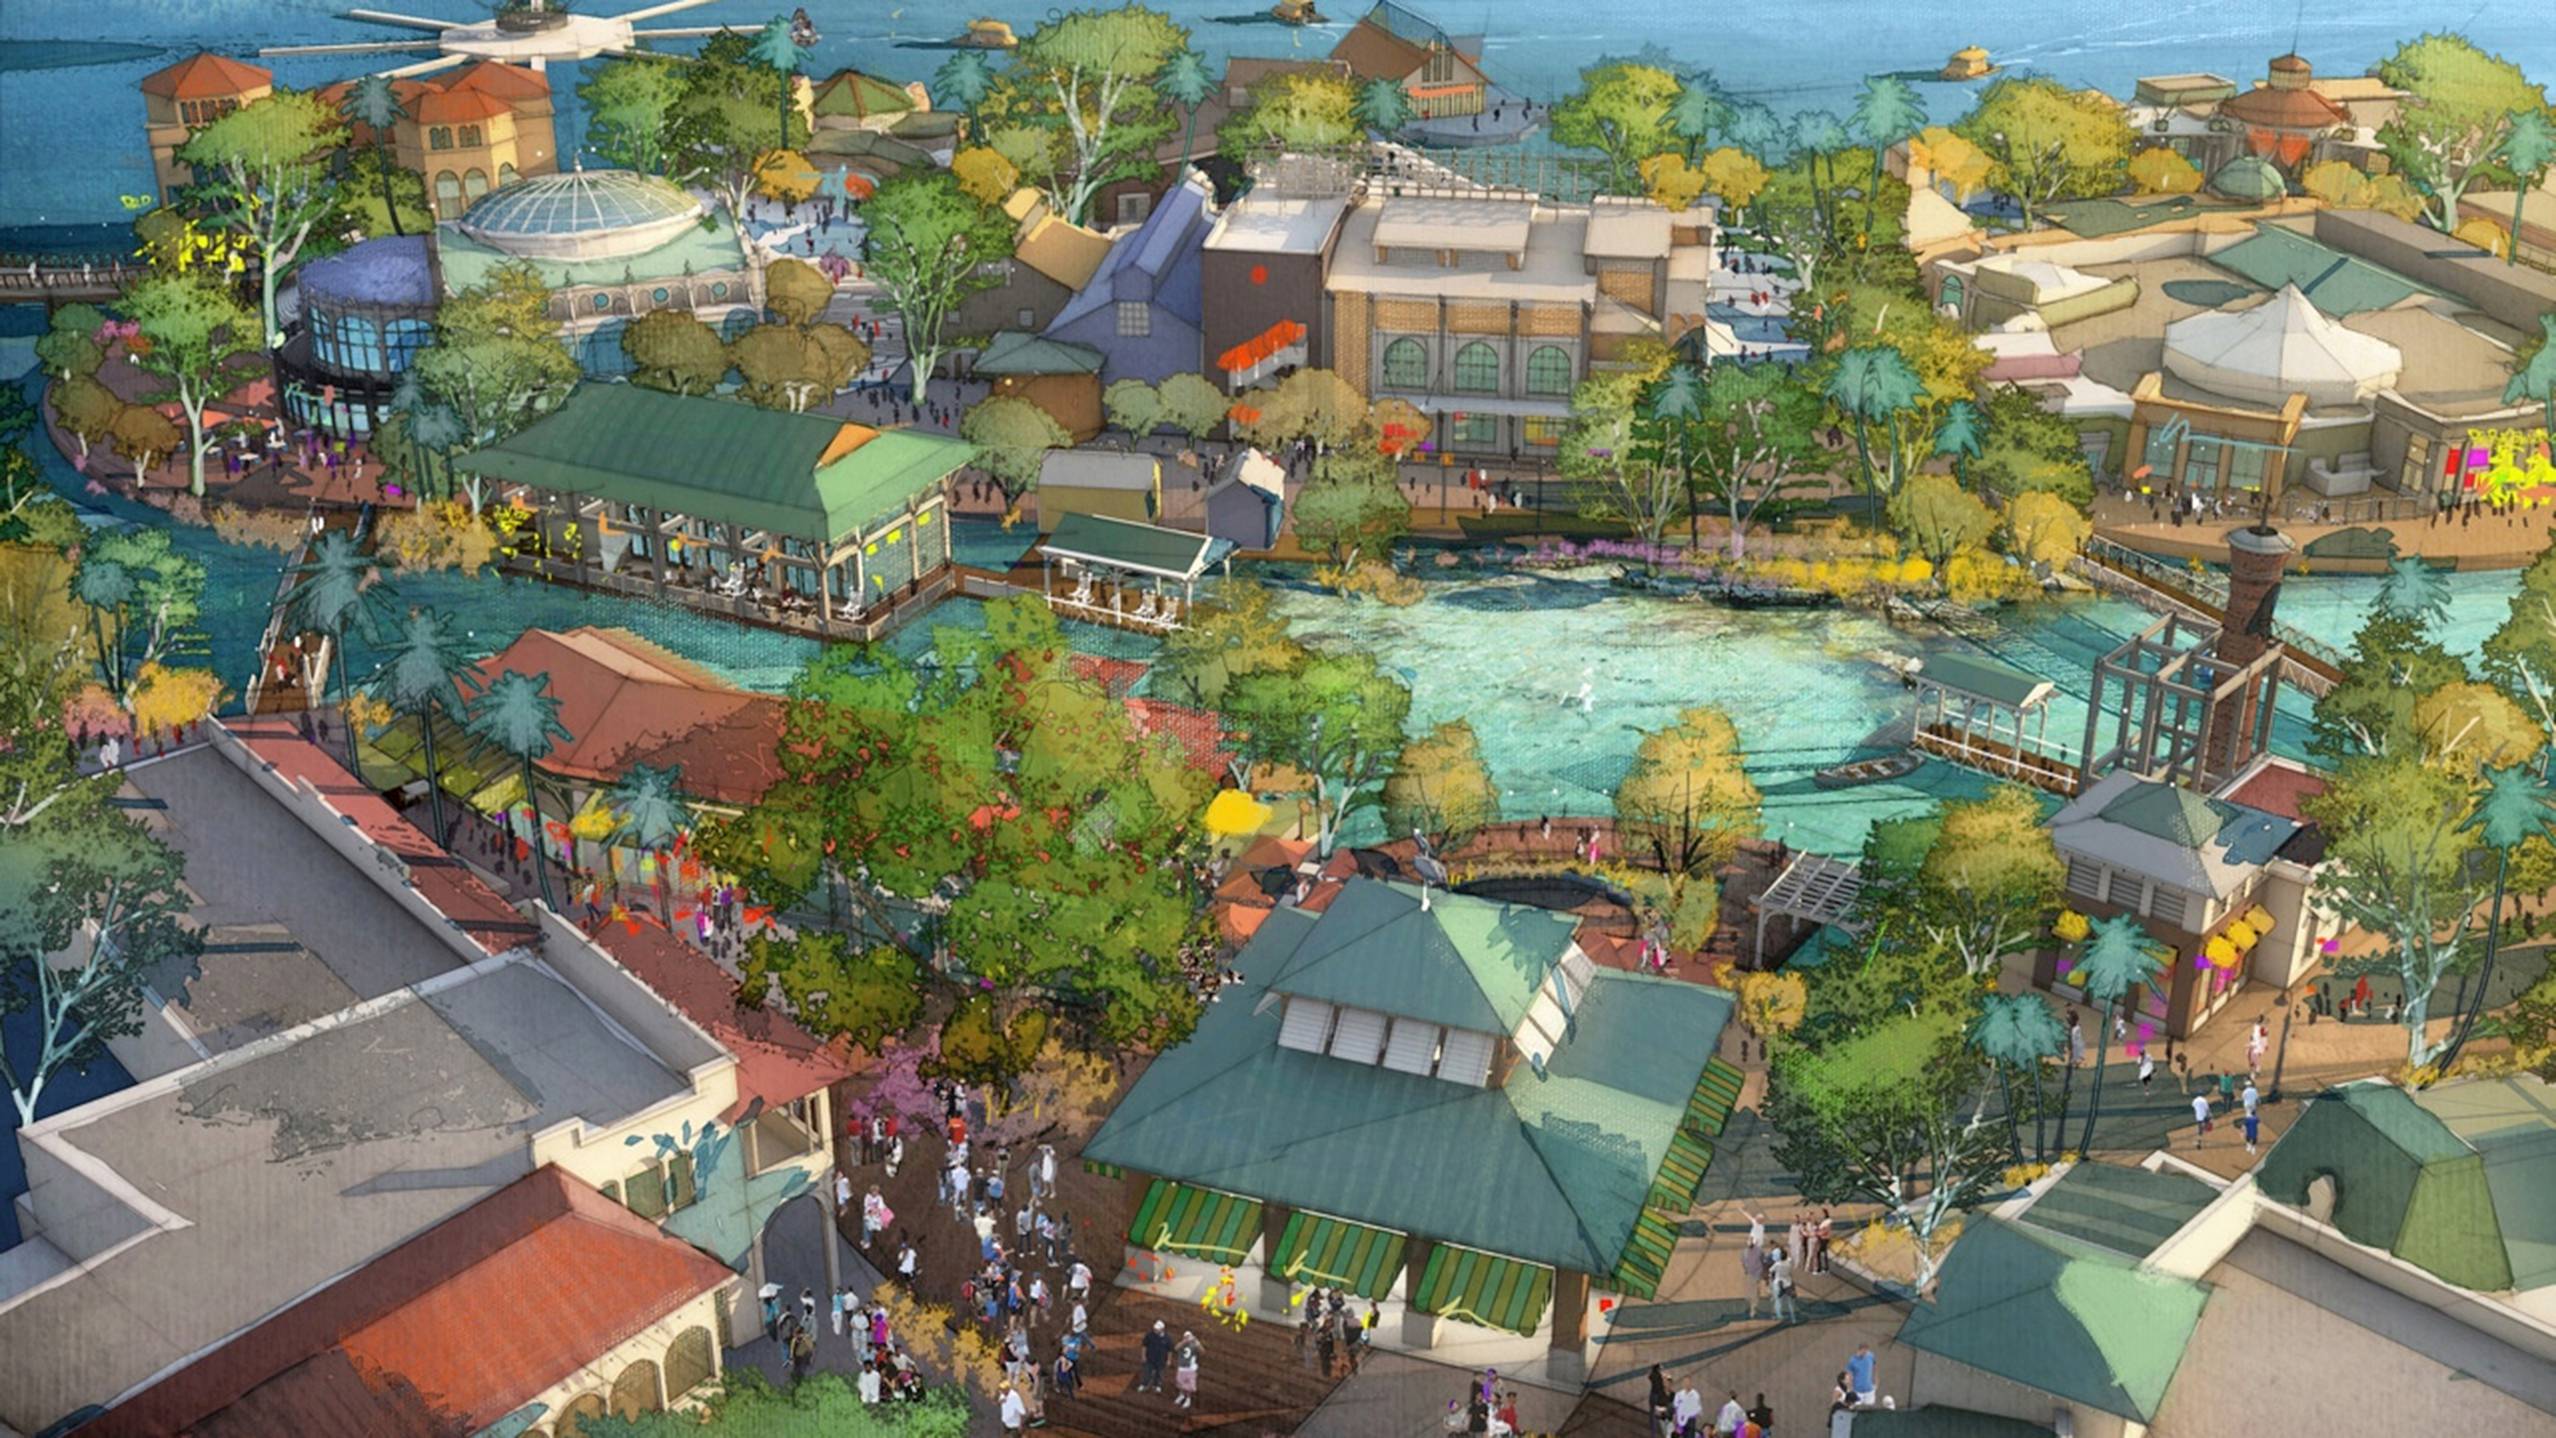 Disney officially announce Disney Springs